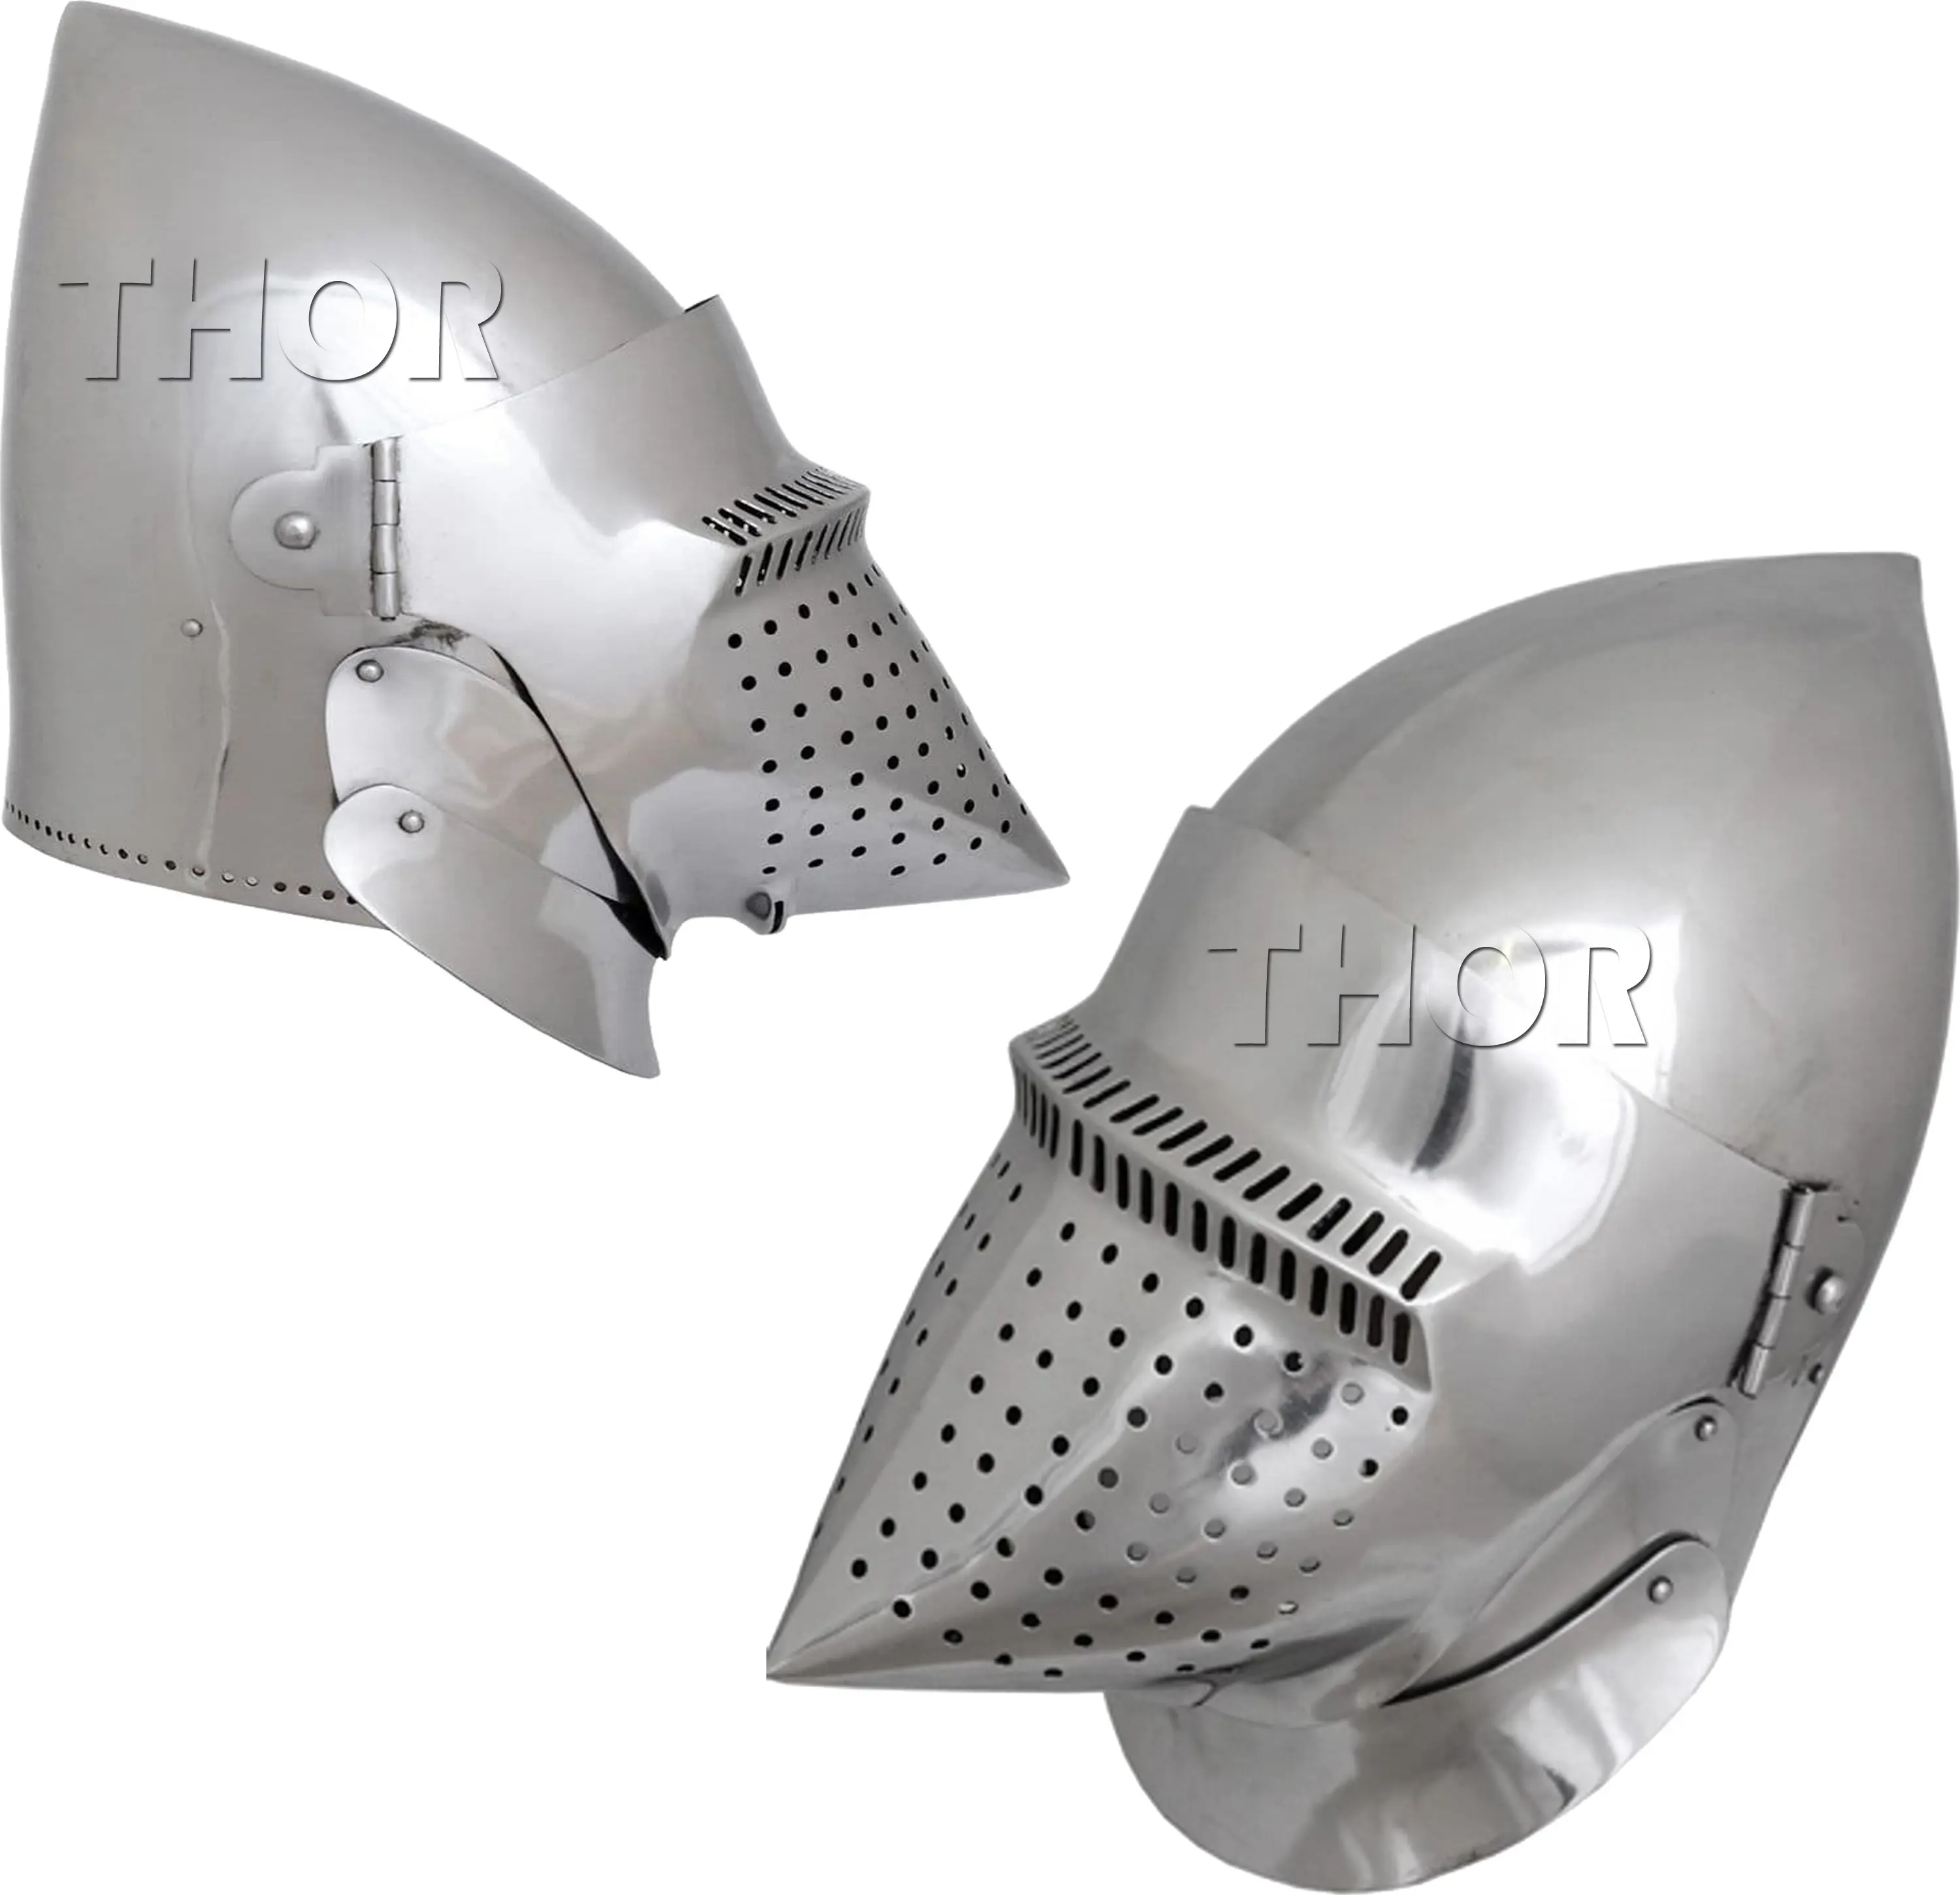 Medieval Pigi Face SCA Armor Helmet Reenactment Battle Warrior Armor Helmet Costume Armor